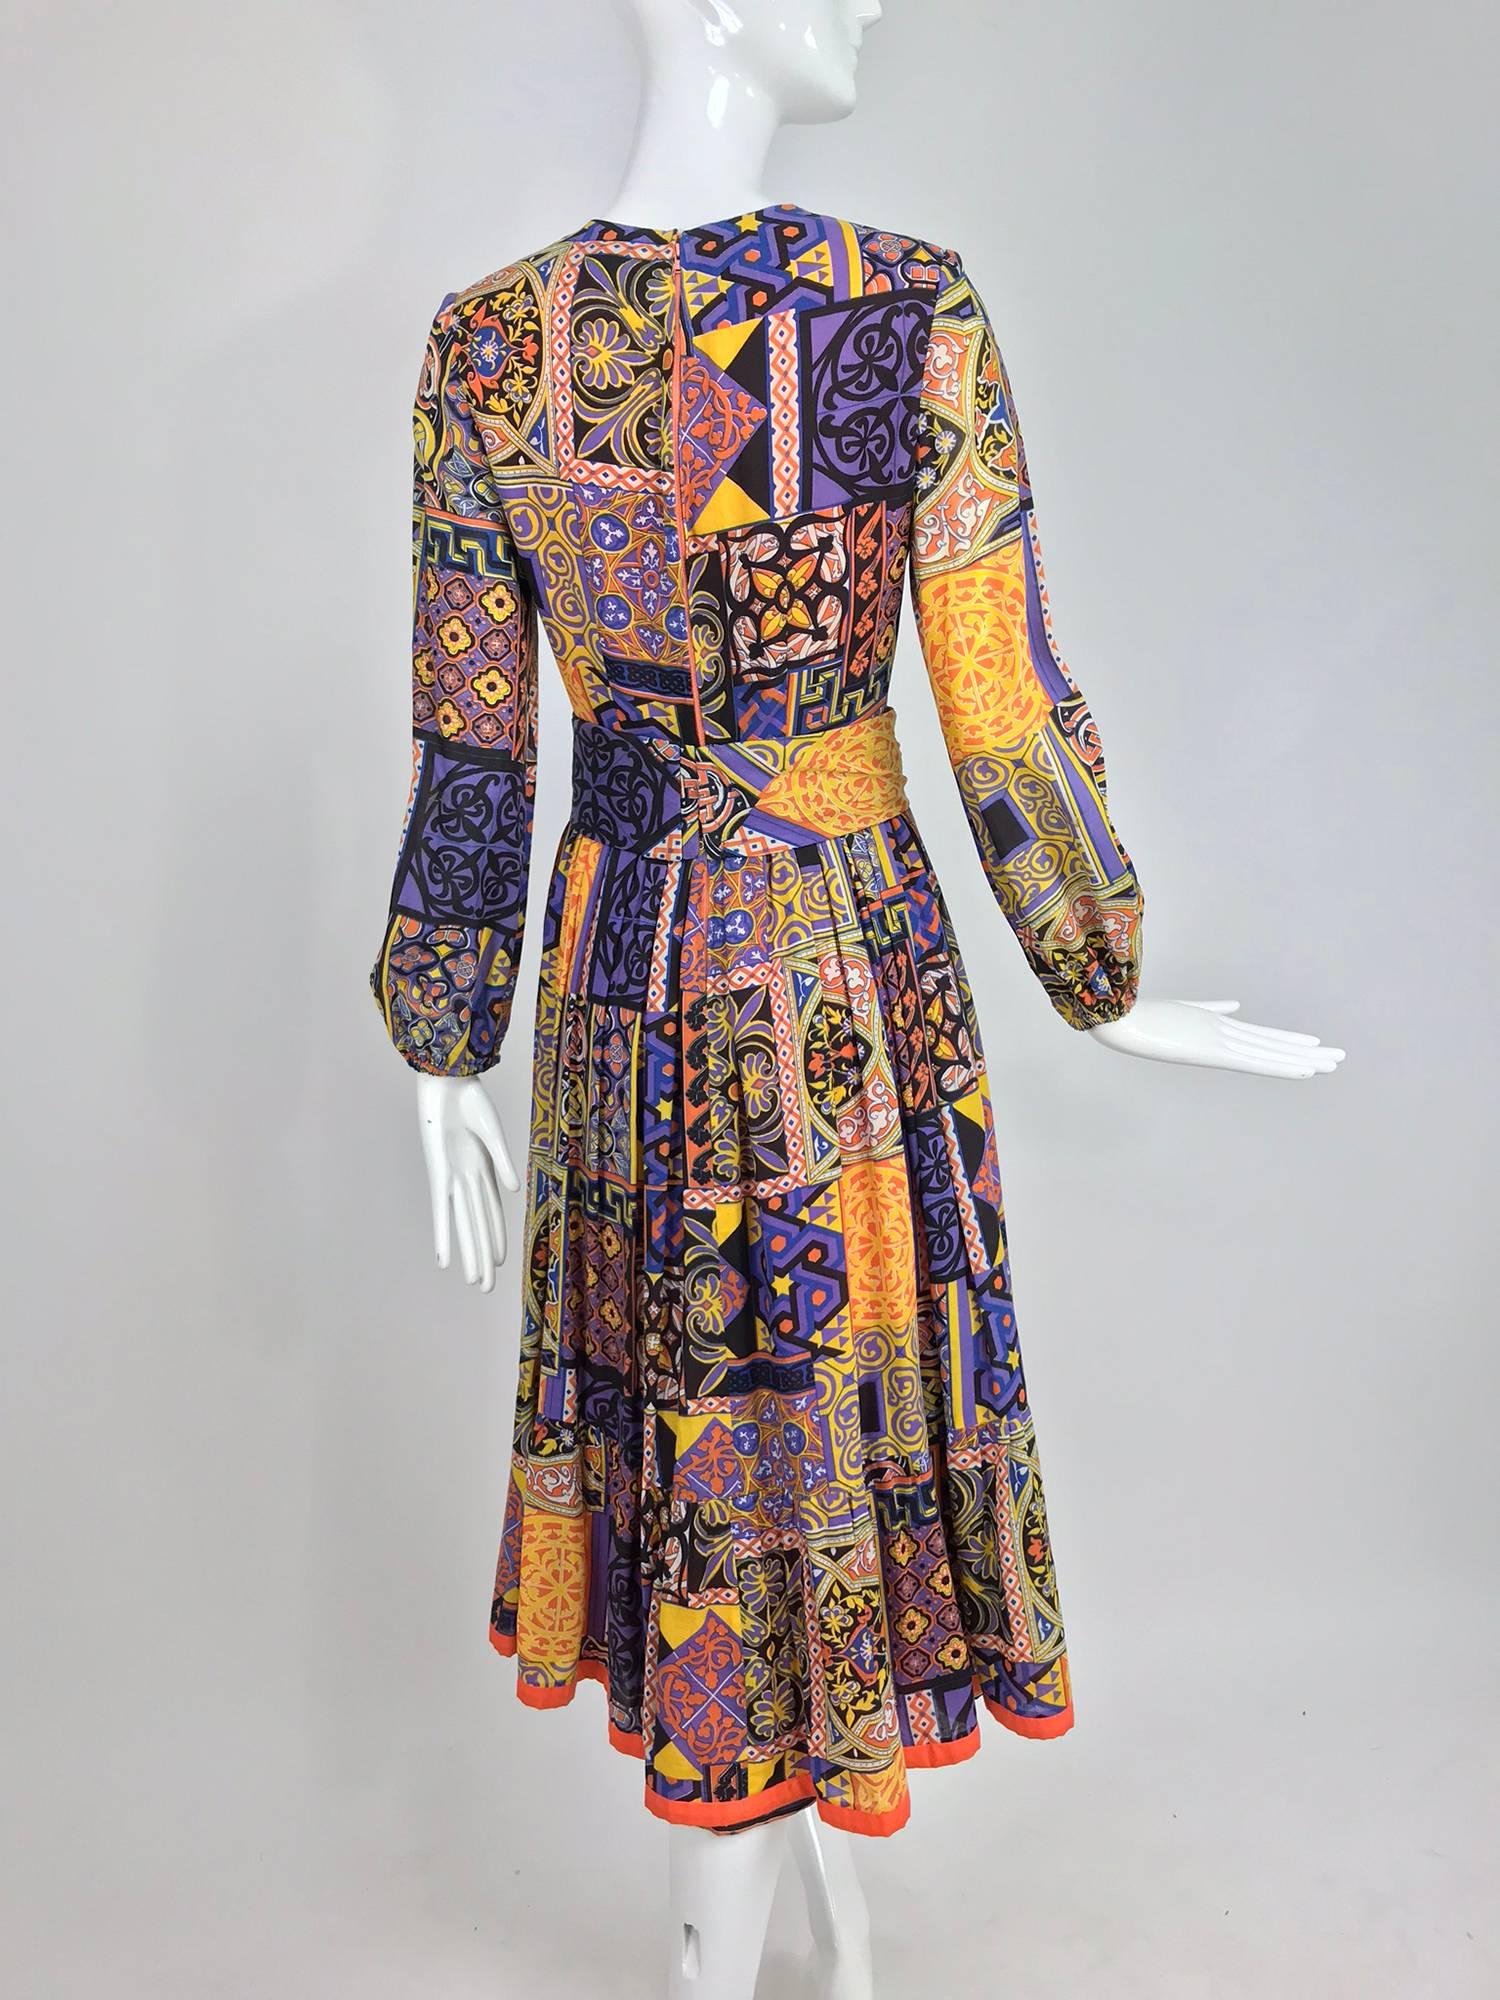 Moorish mosaic cotton print laced front bohemian dress 1960s 6